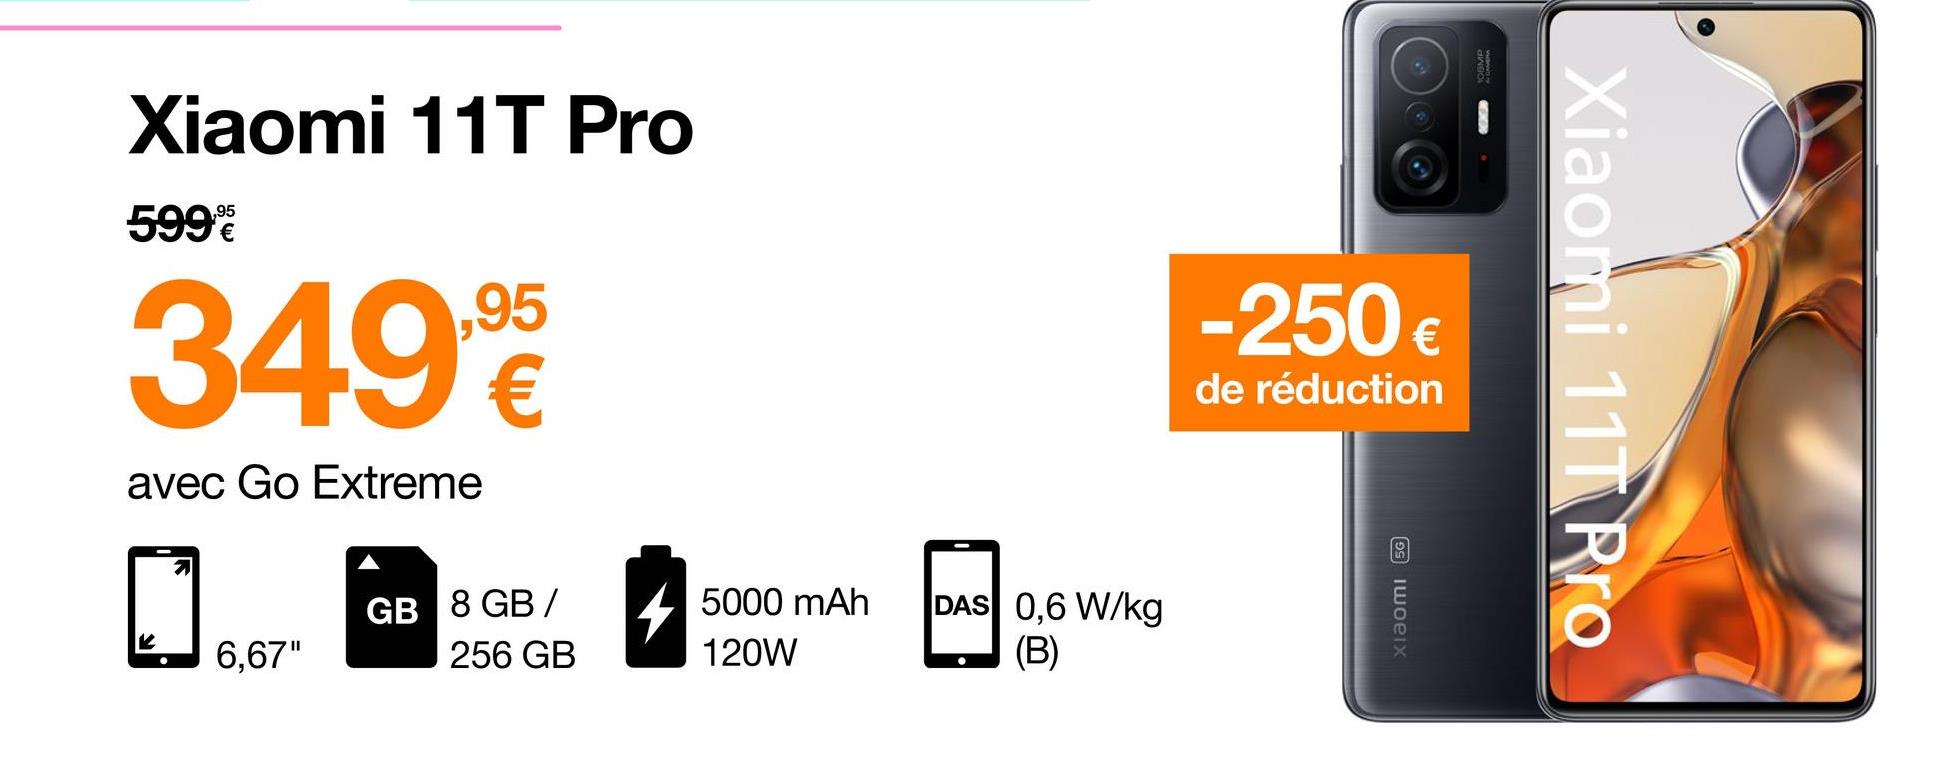 Xiaomi 11T Pro
,95
599
349
,95
€
-250€
Xiaomi 11T Pro
de réduction
avec Go Extreme
GB 8 GB /
4
5000 mAh
120W
DAS 0,6 W/kg
(B)
xiaomi 5G
6,67"
256 GB
